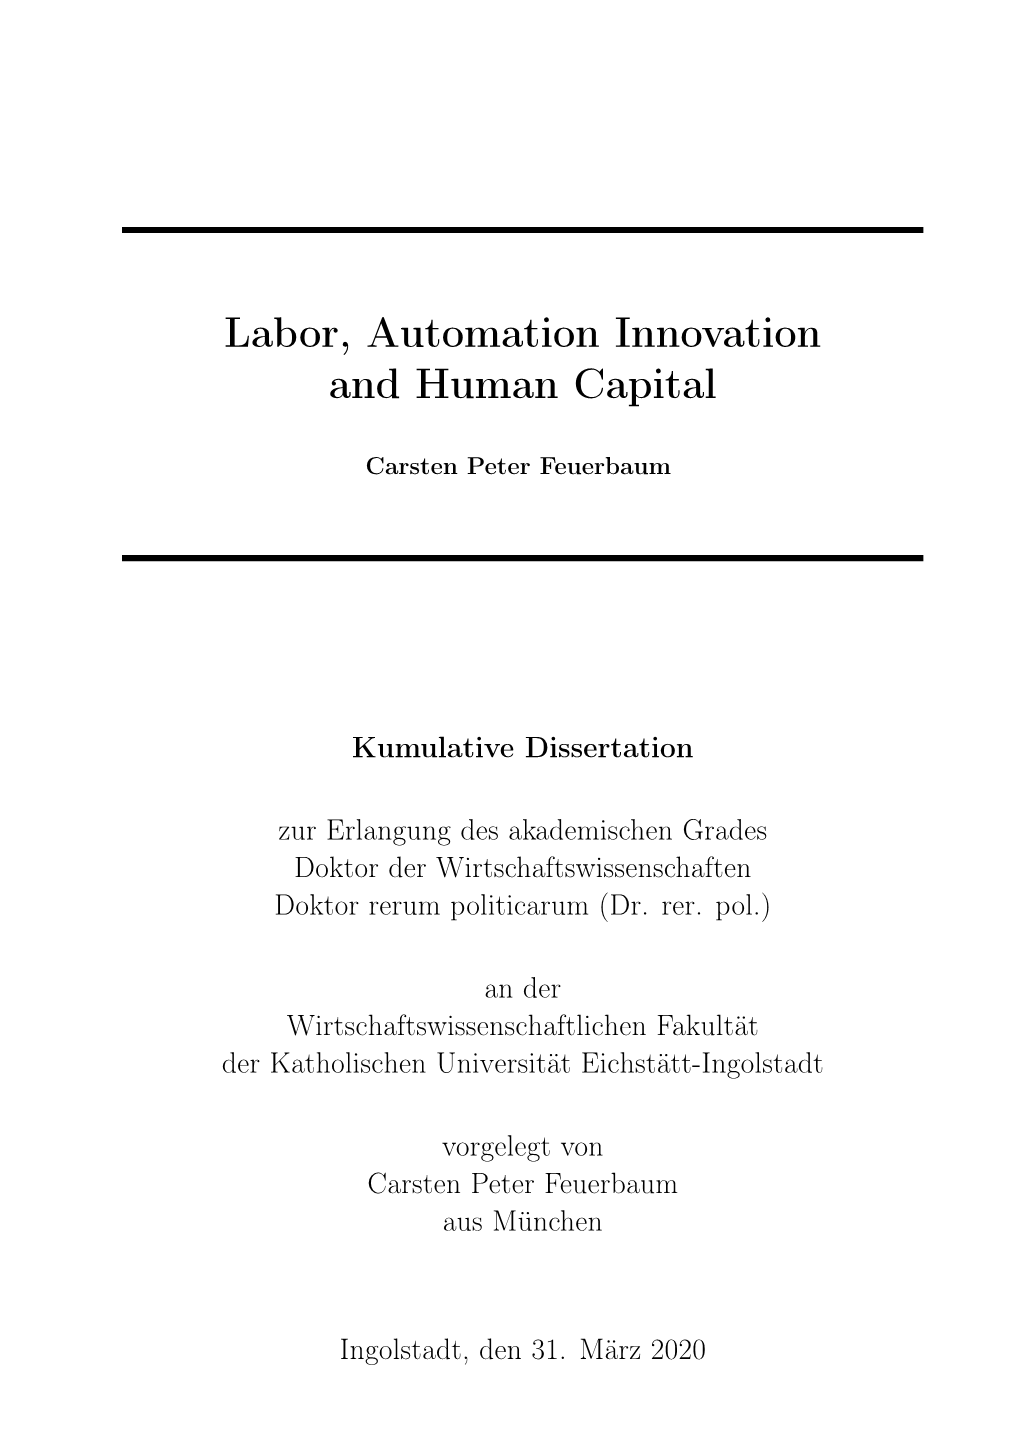 Labor, Automation Innovation and Human Capital